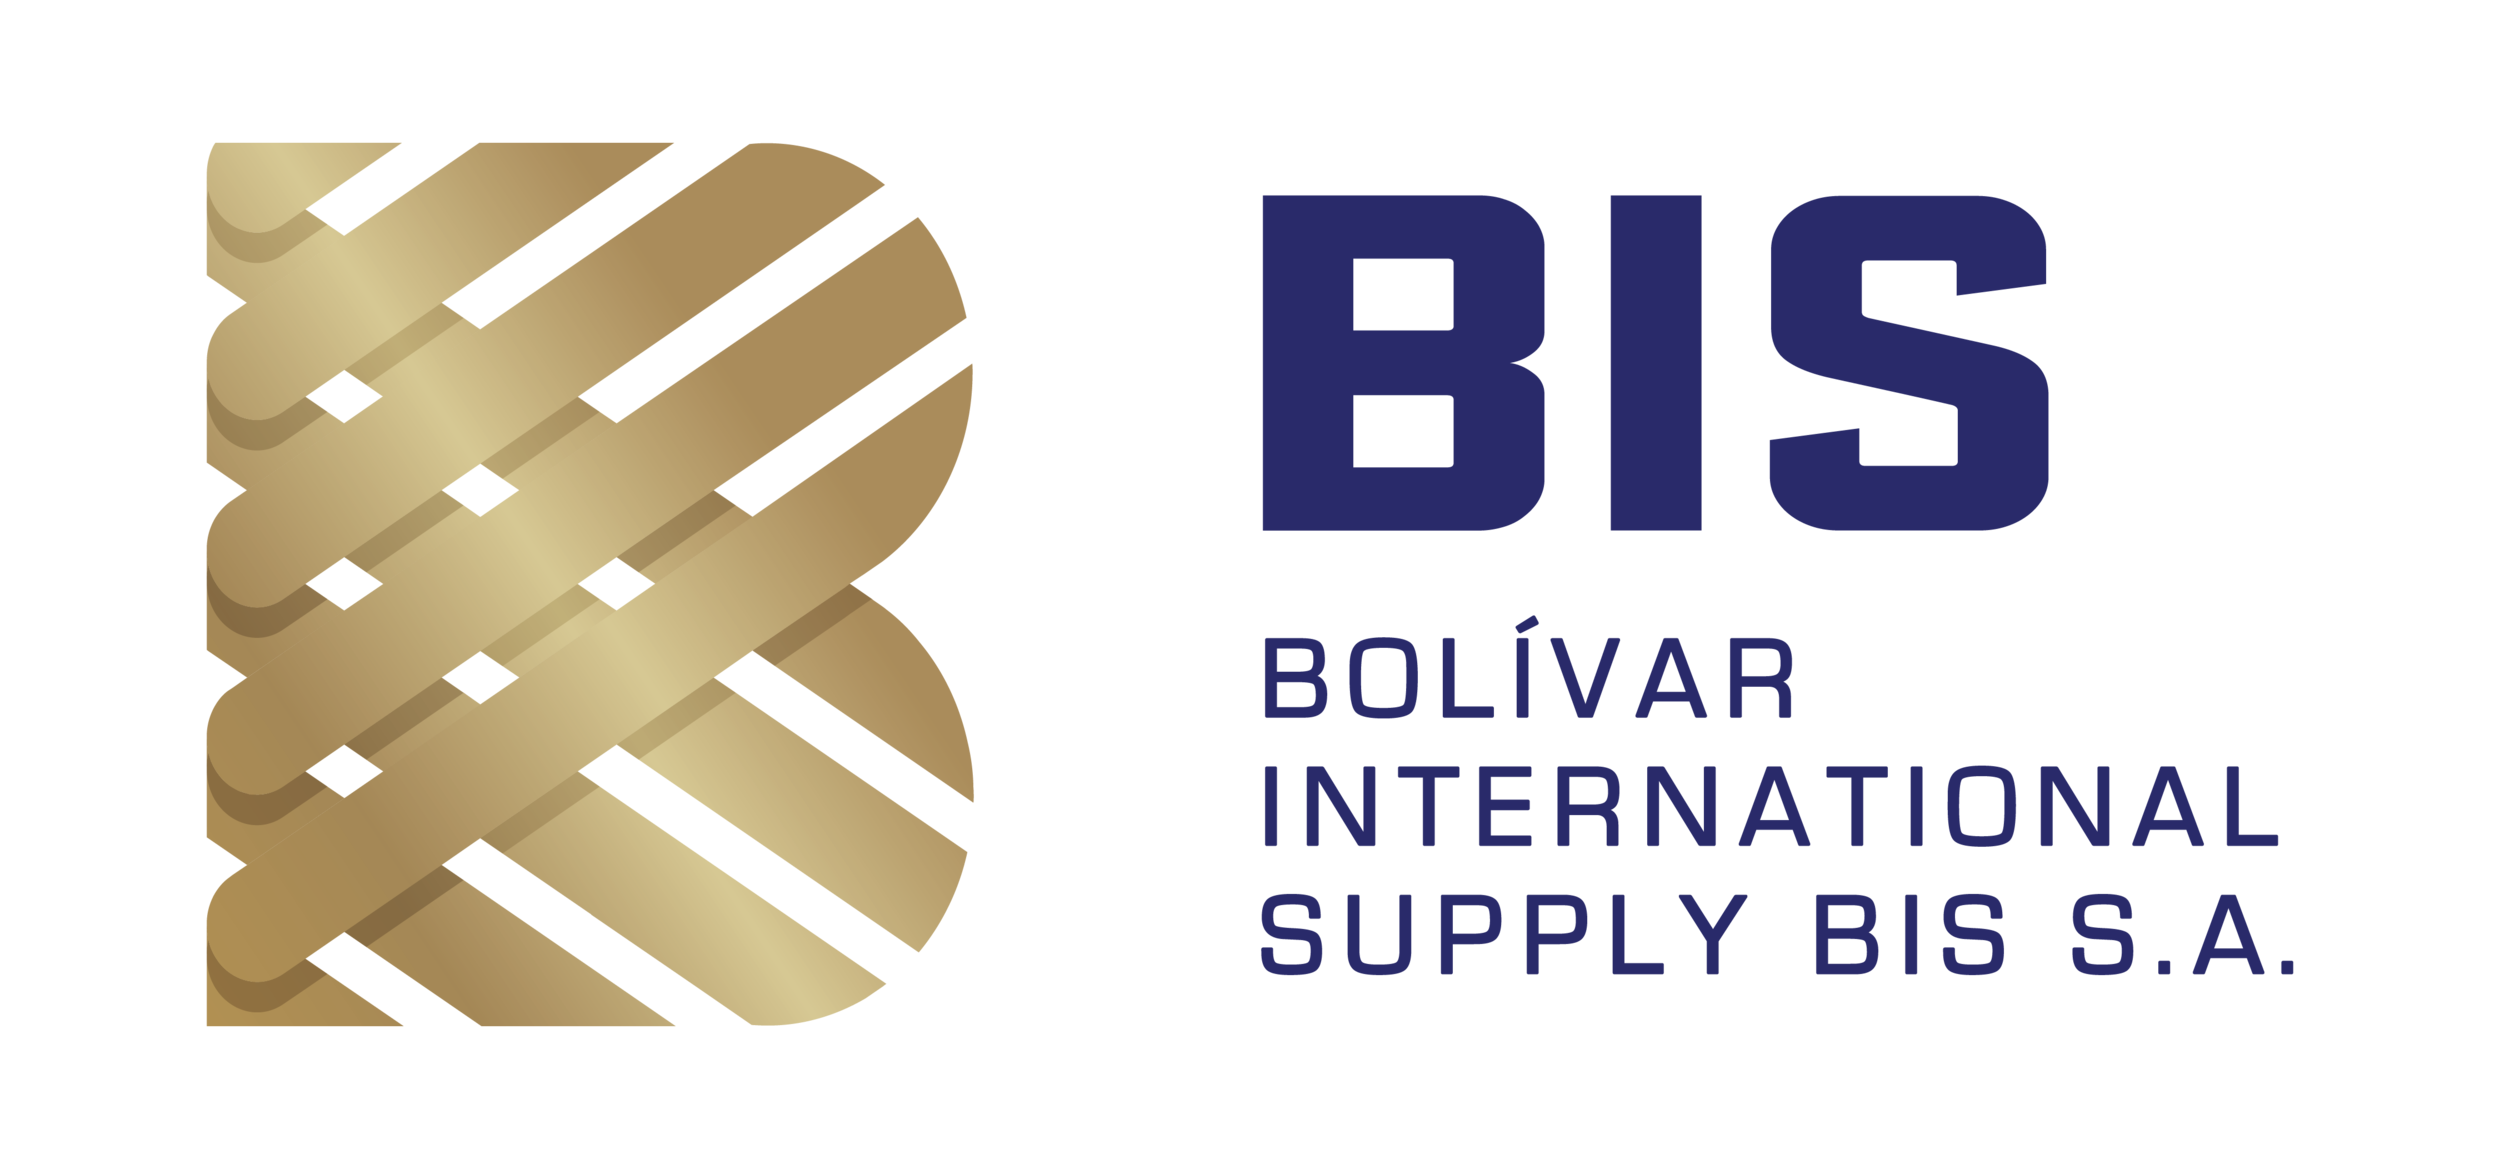 BOLIVAR INTERNATIONAL SUPPLY BIS S.A.